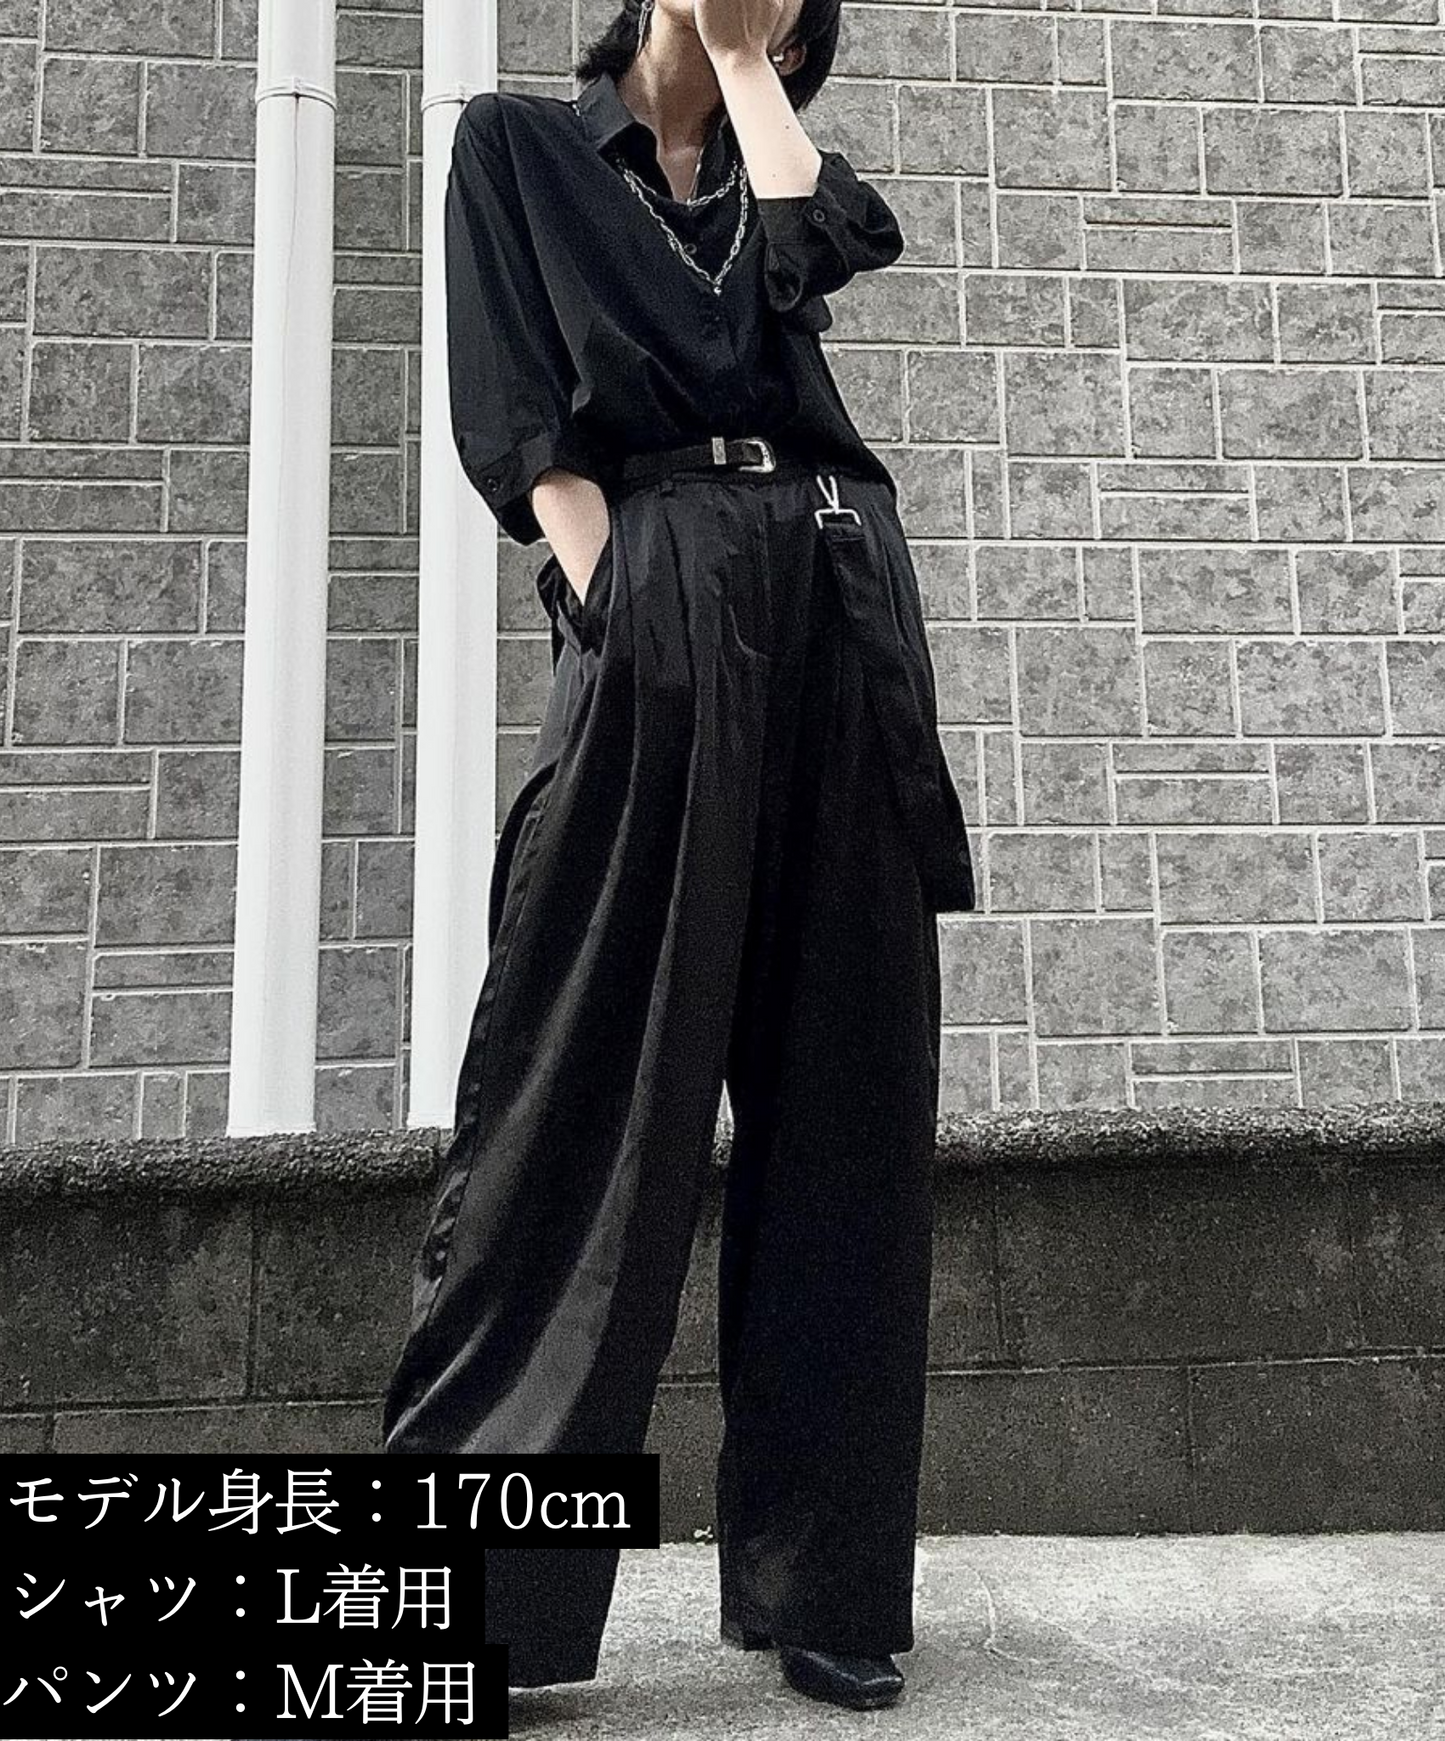 【style32】dark mode outfit set EN1093（ shirt + pants set）